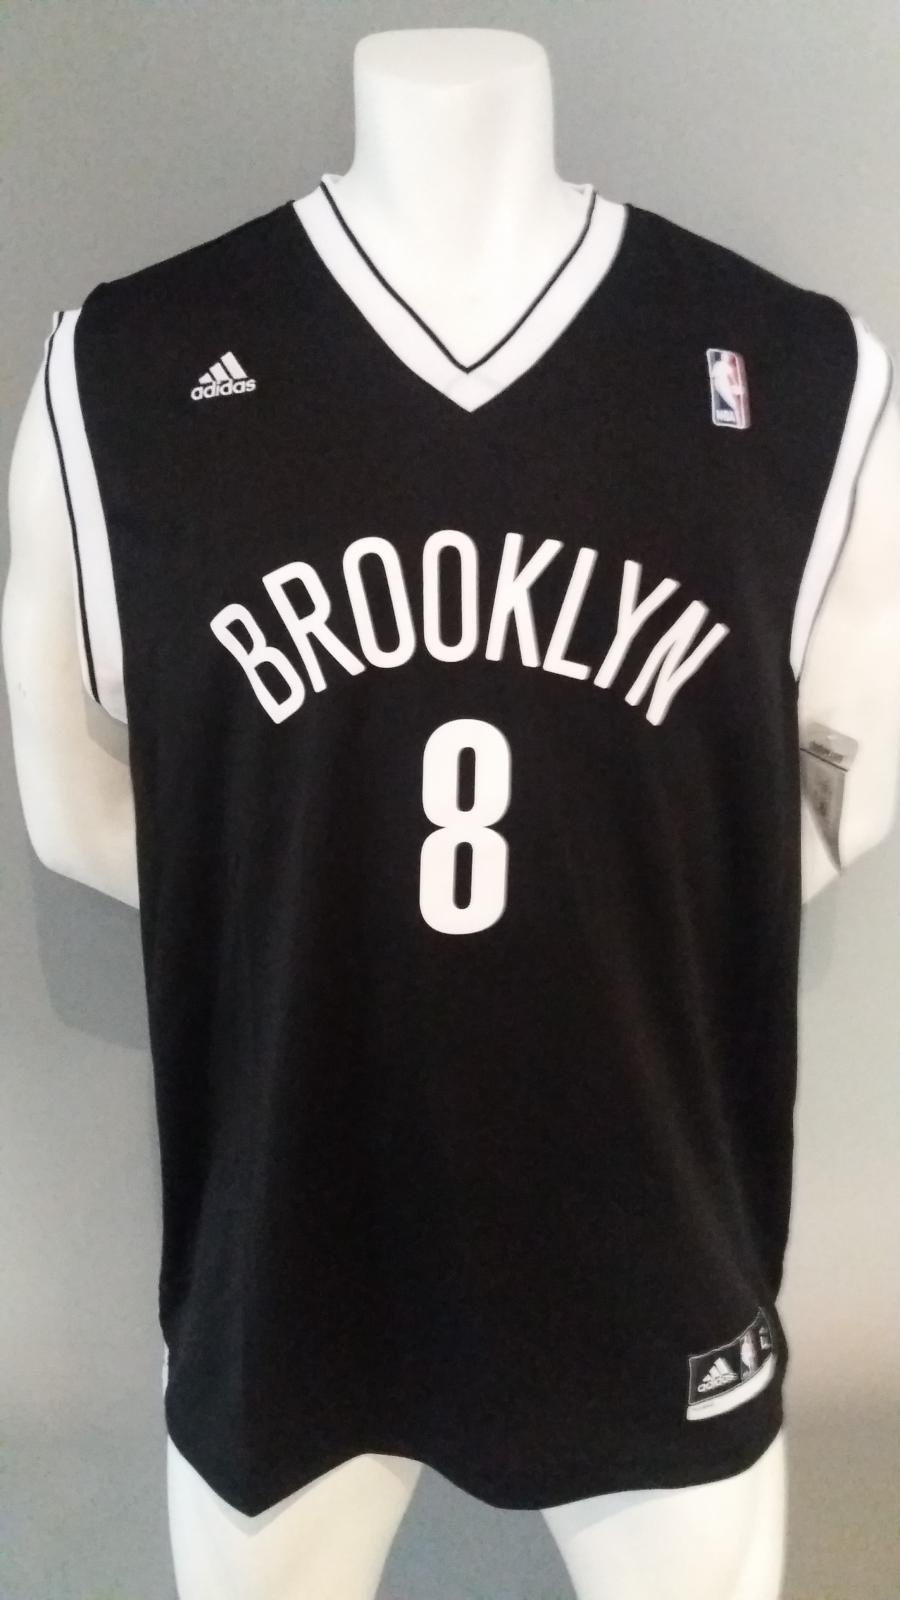 Jersey - Replica - Hombre - Deron Williams - Brooklyn Nets - Road - Adidas